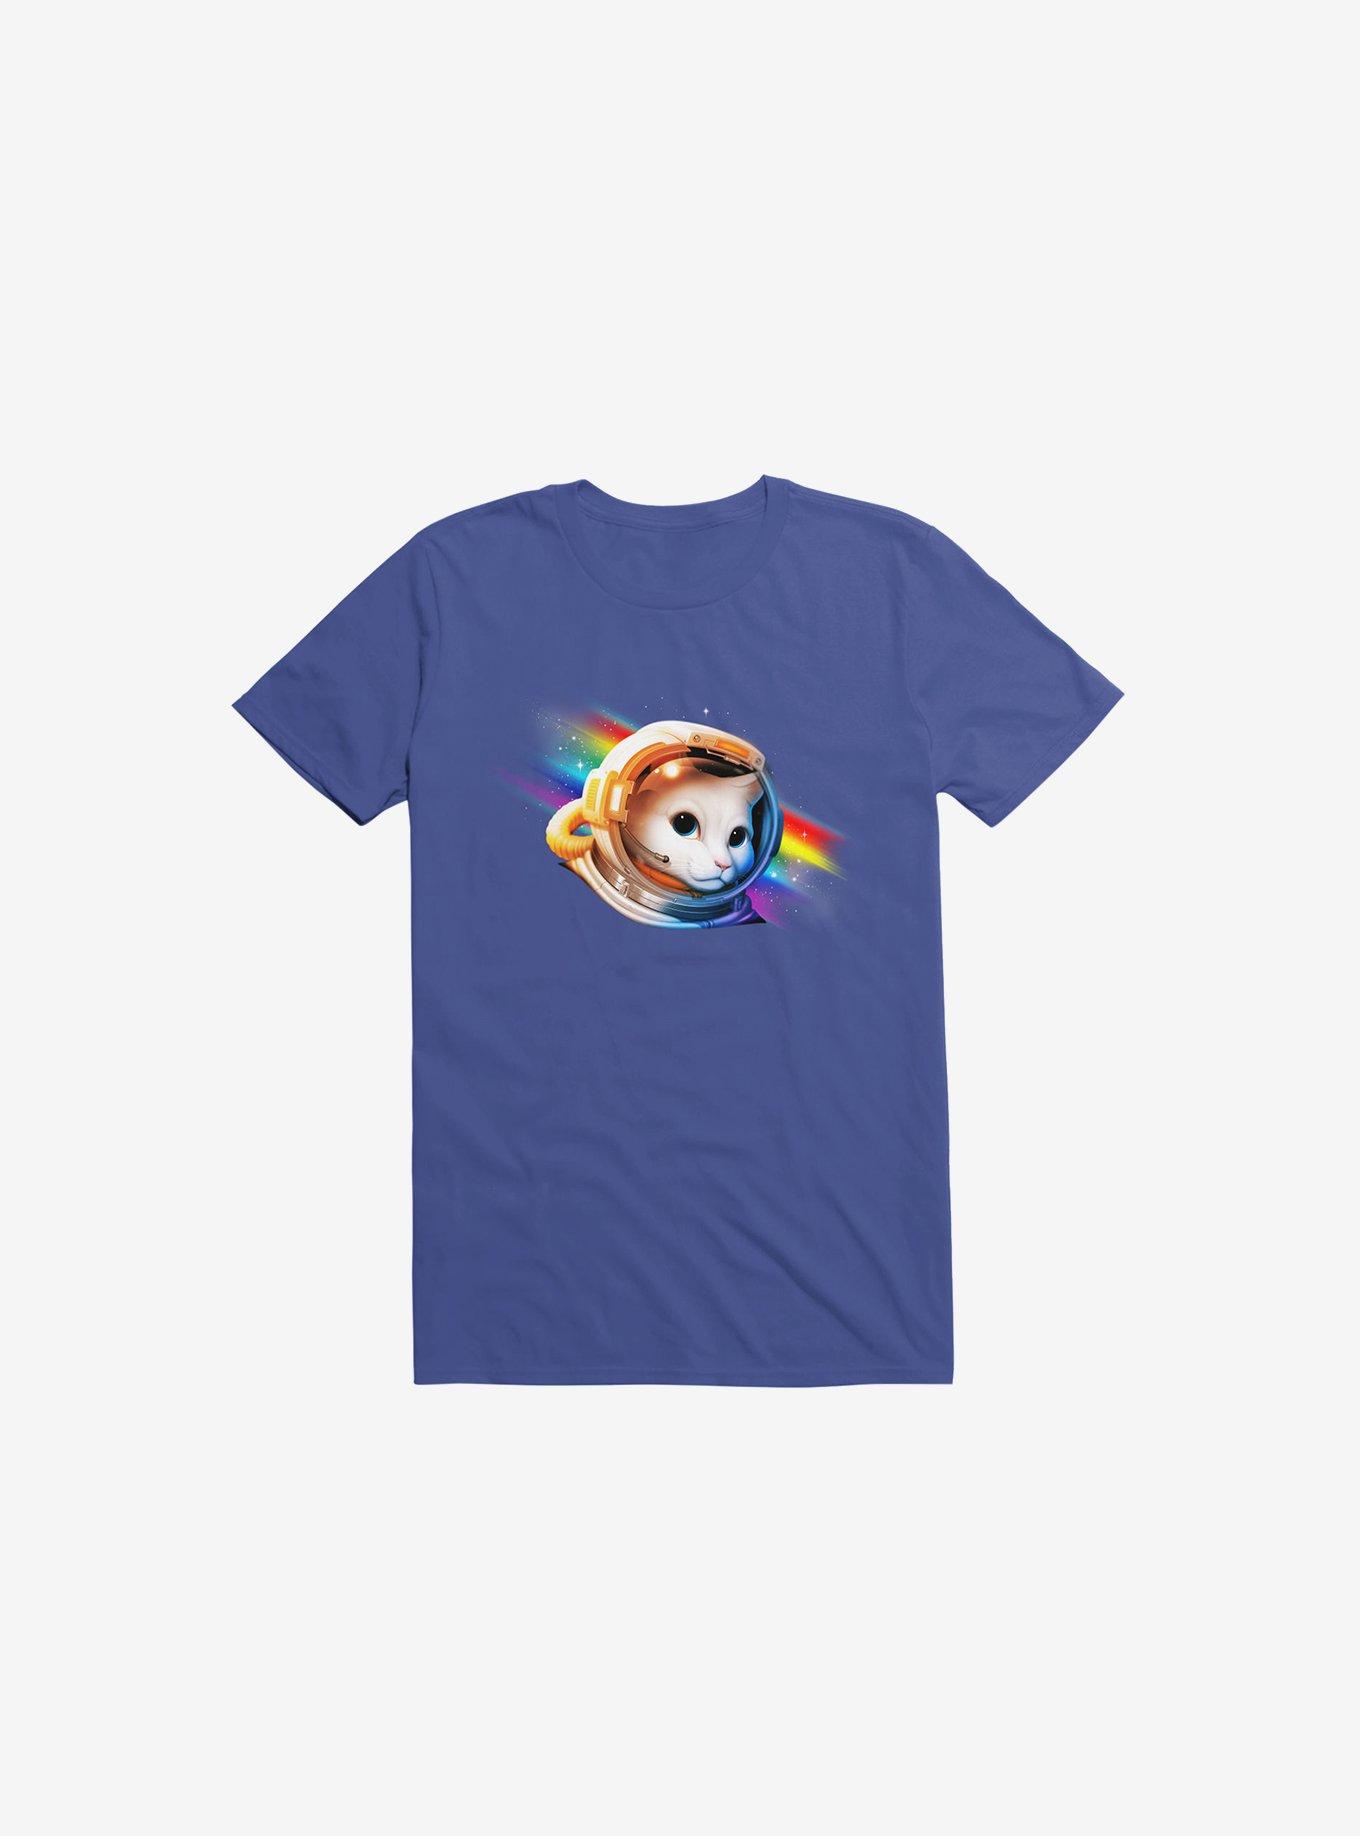 Astronaut Cat Royal Blue T-Shirt